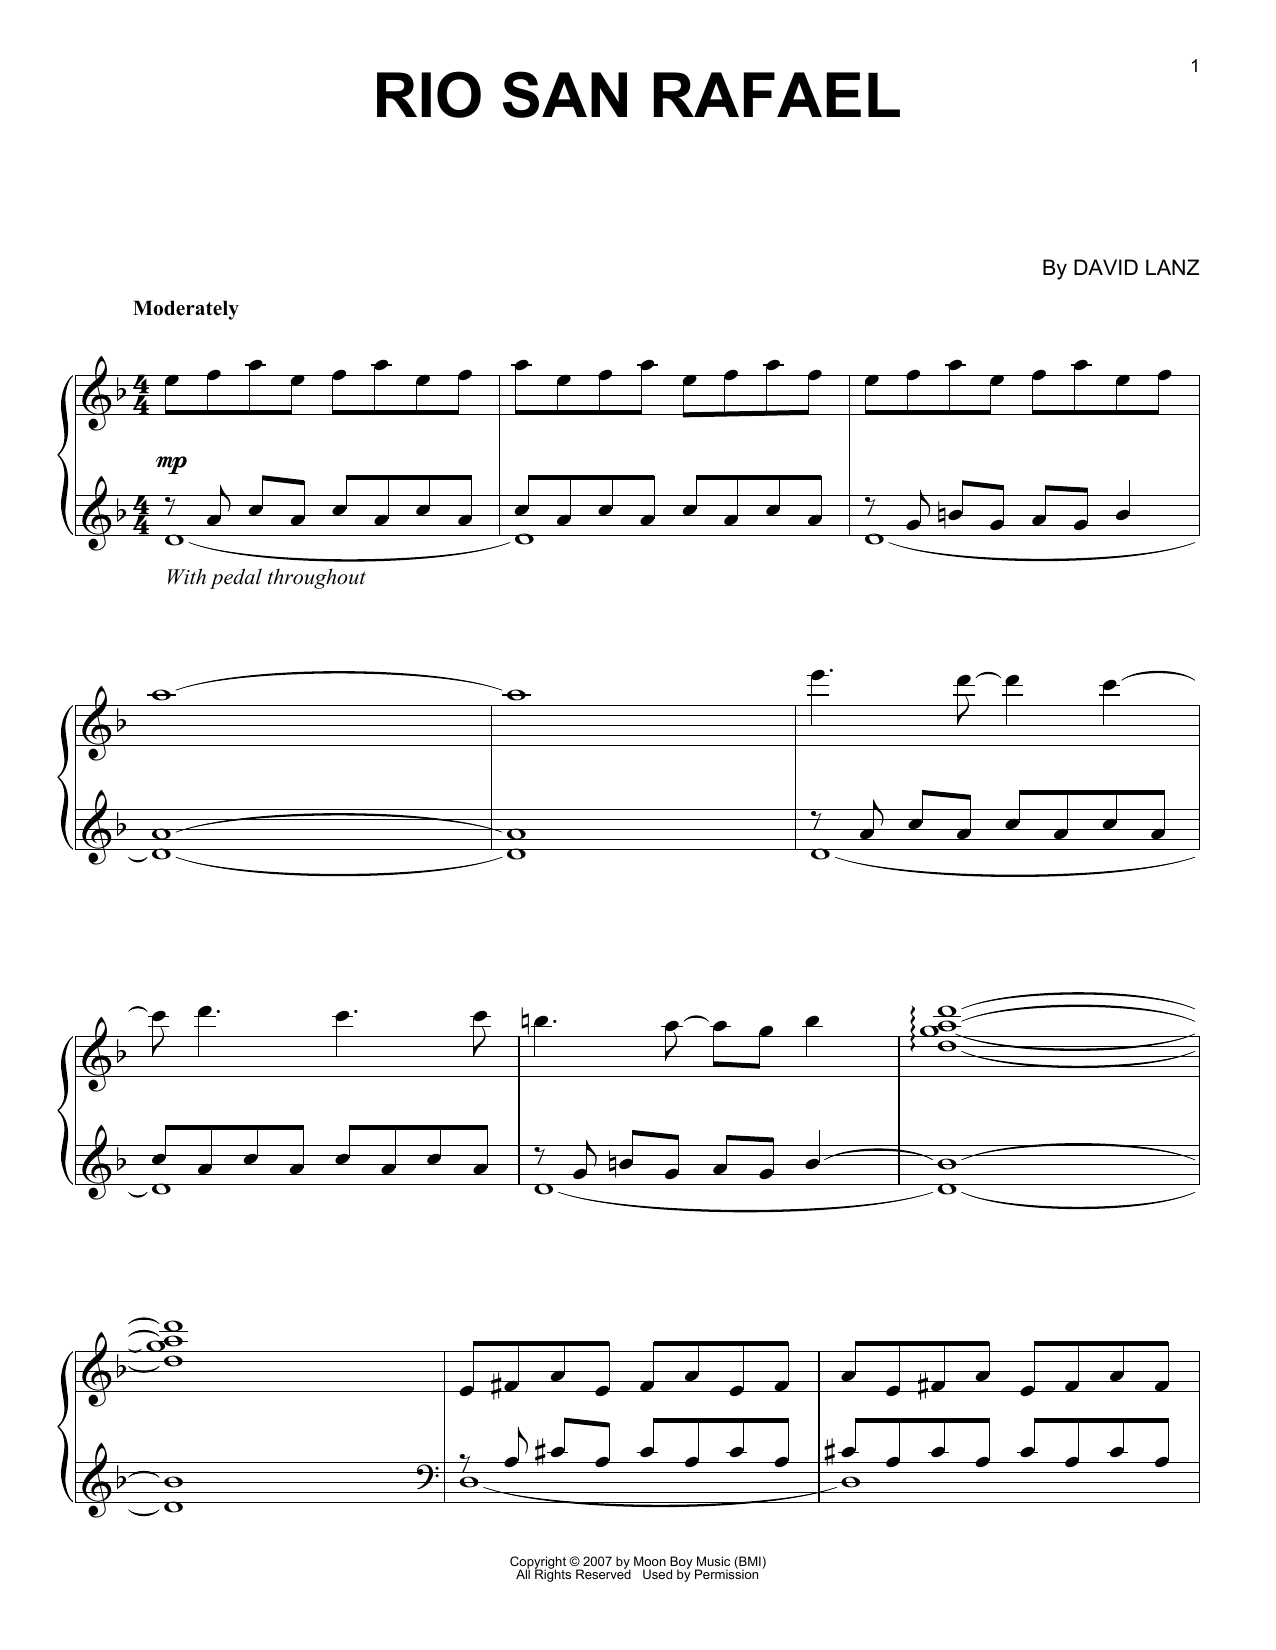 David Lanz & Gary Stroutsos Rio San Rafael Sheet Music Notes & Chords for Piano Solo - Download or Print PDF